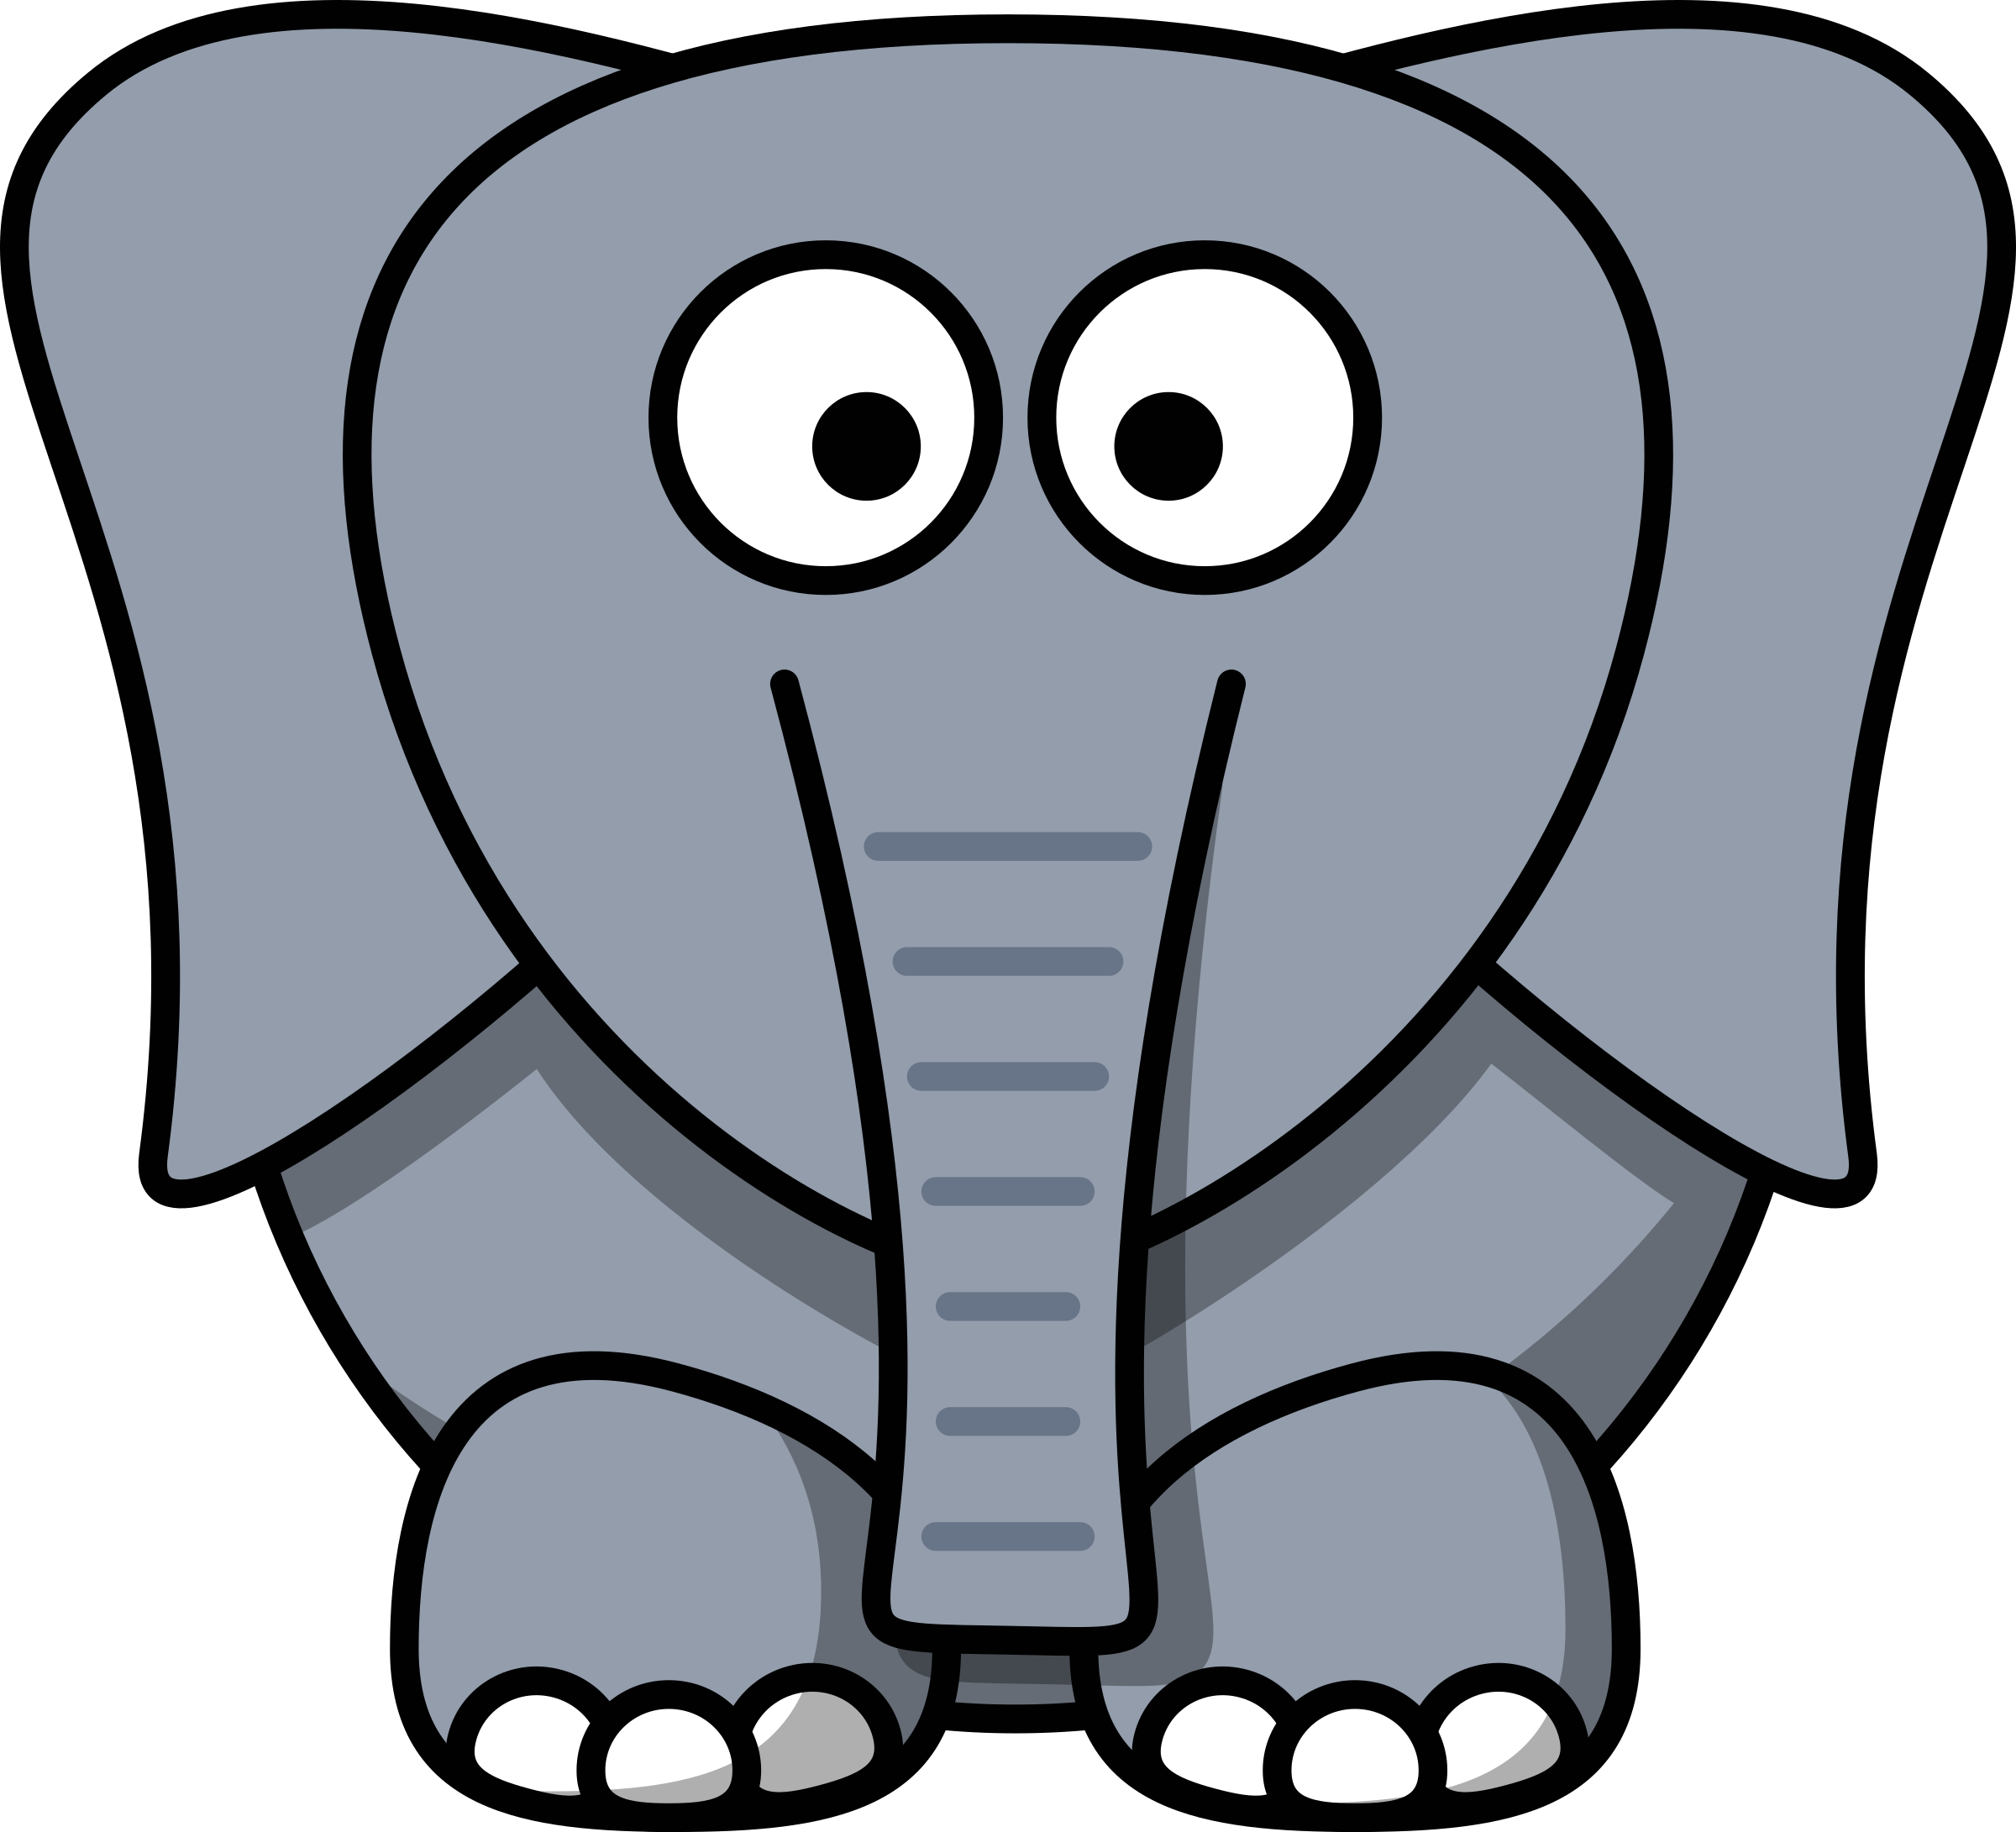 image of a grey elephant facing forward